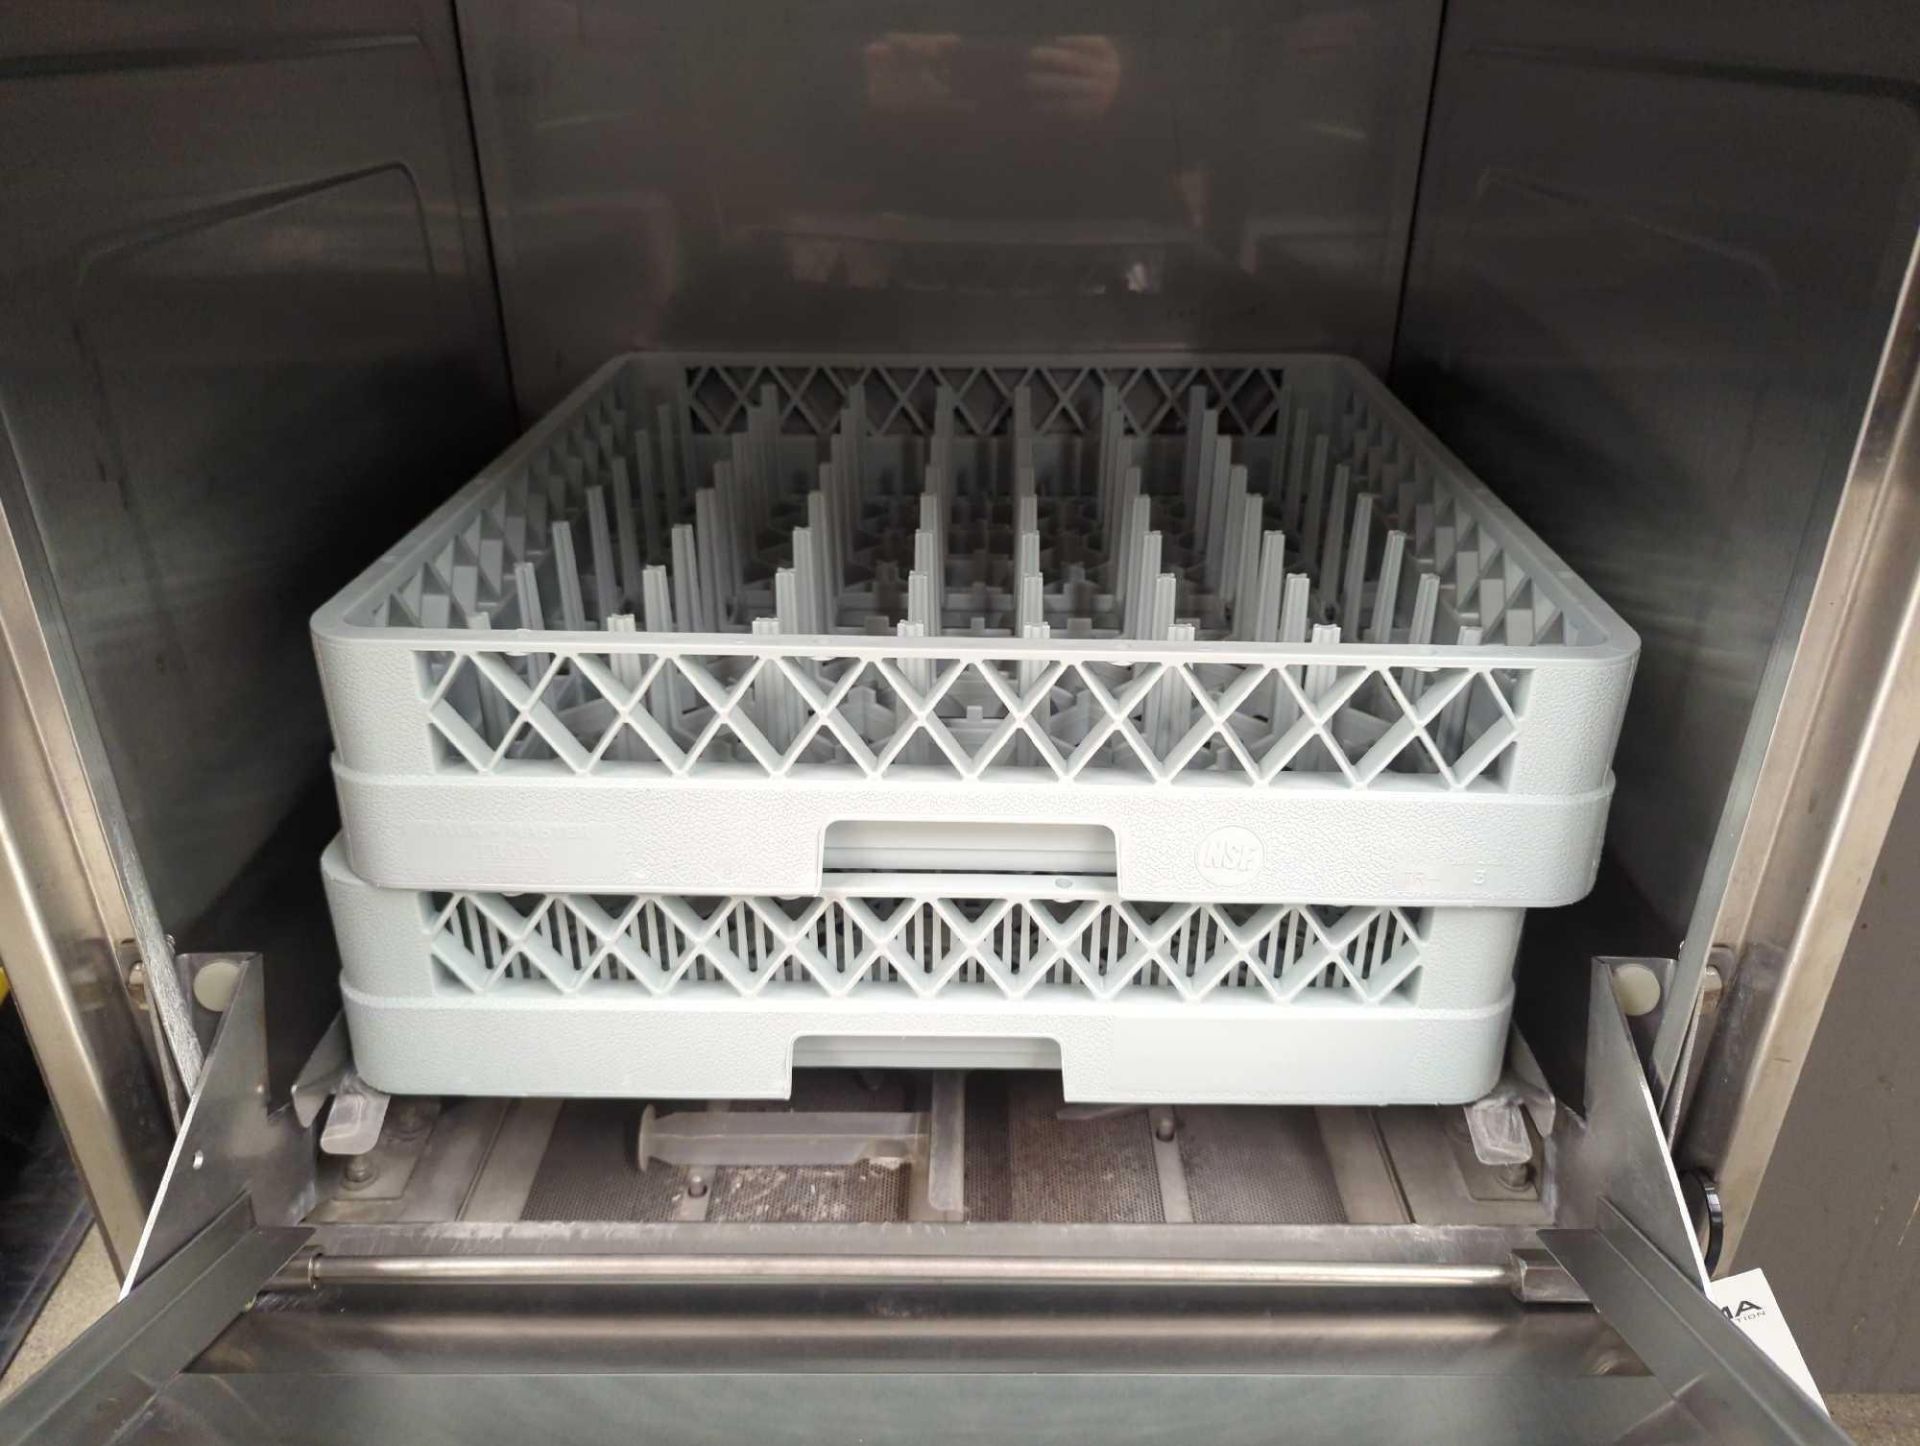 Hobart LXi-H stainless Steel Hot Water Sanitizing Dishwasher - Image 7 of 9